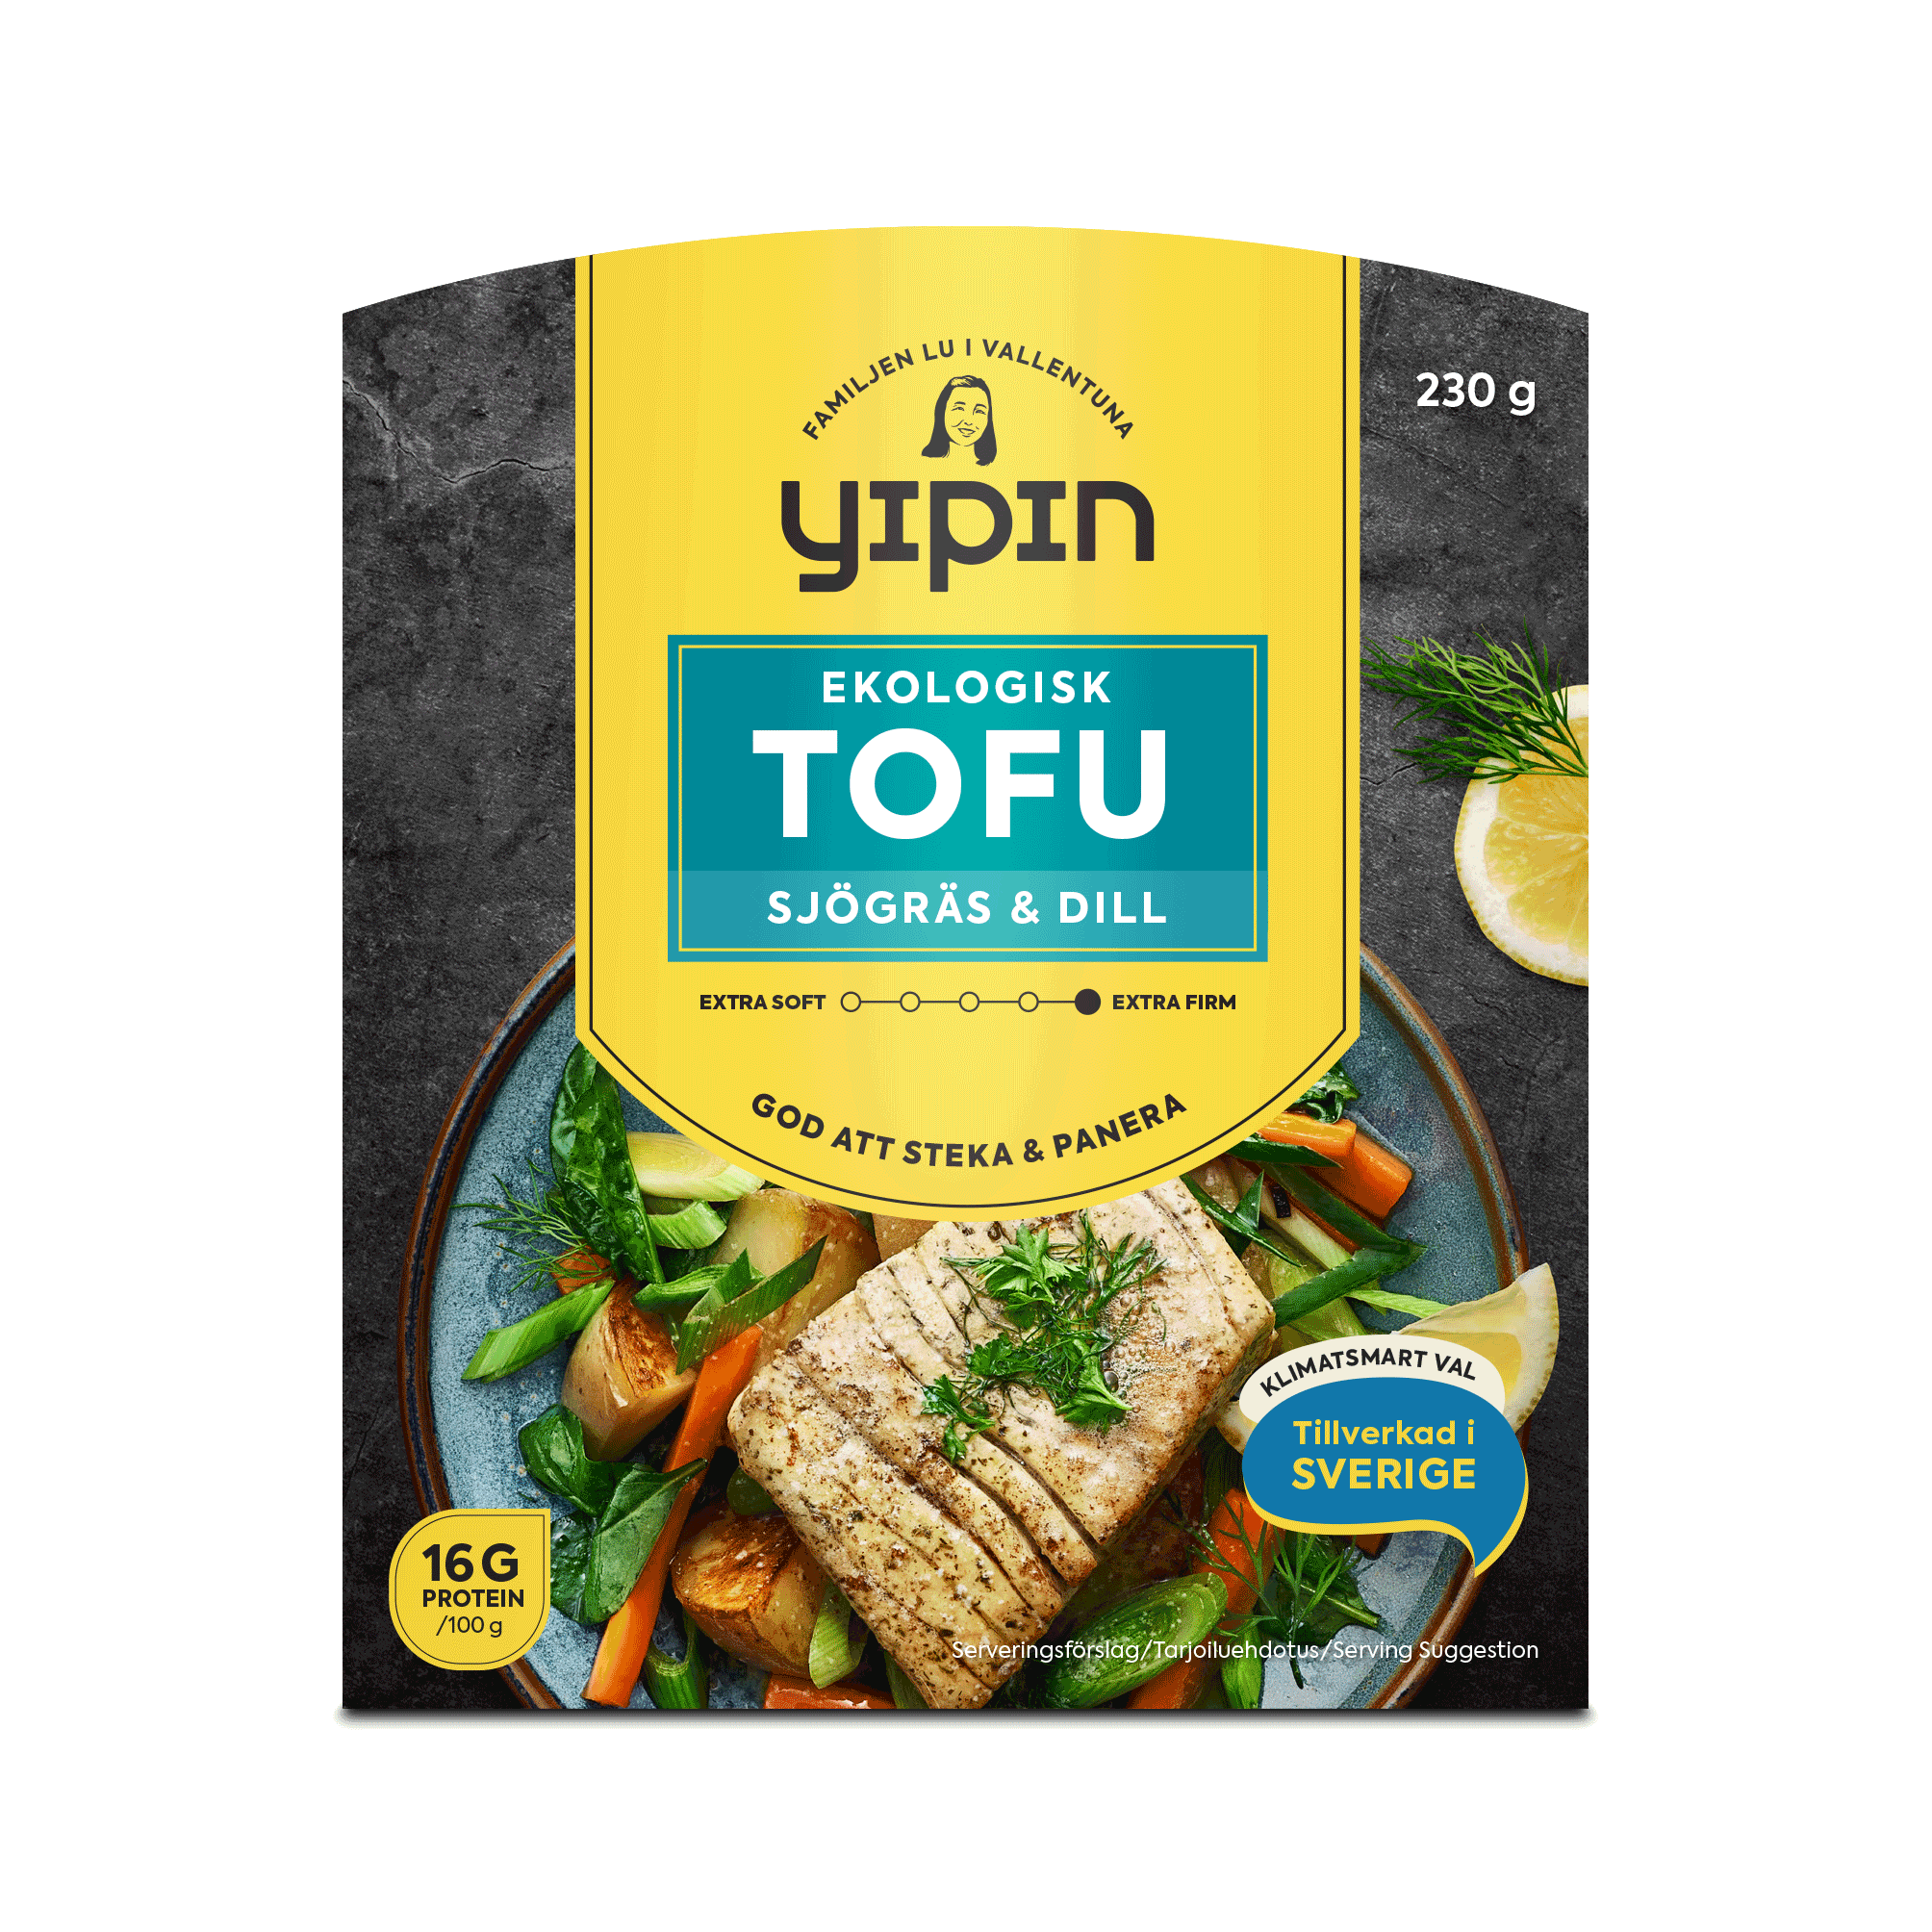 Yipin's Tofu Algen & Dill'